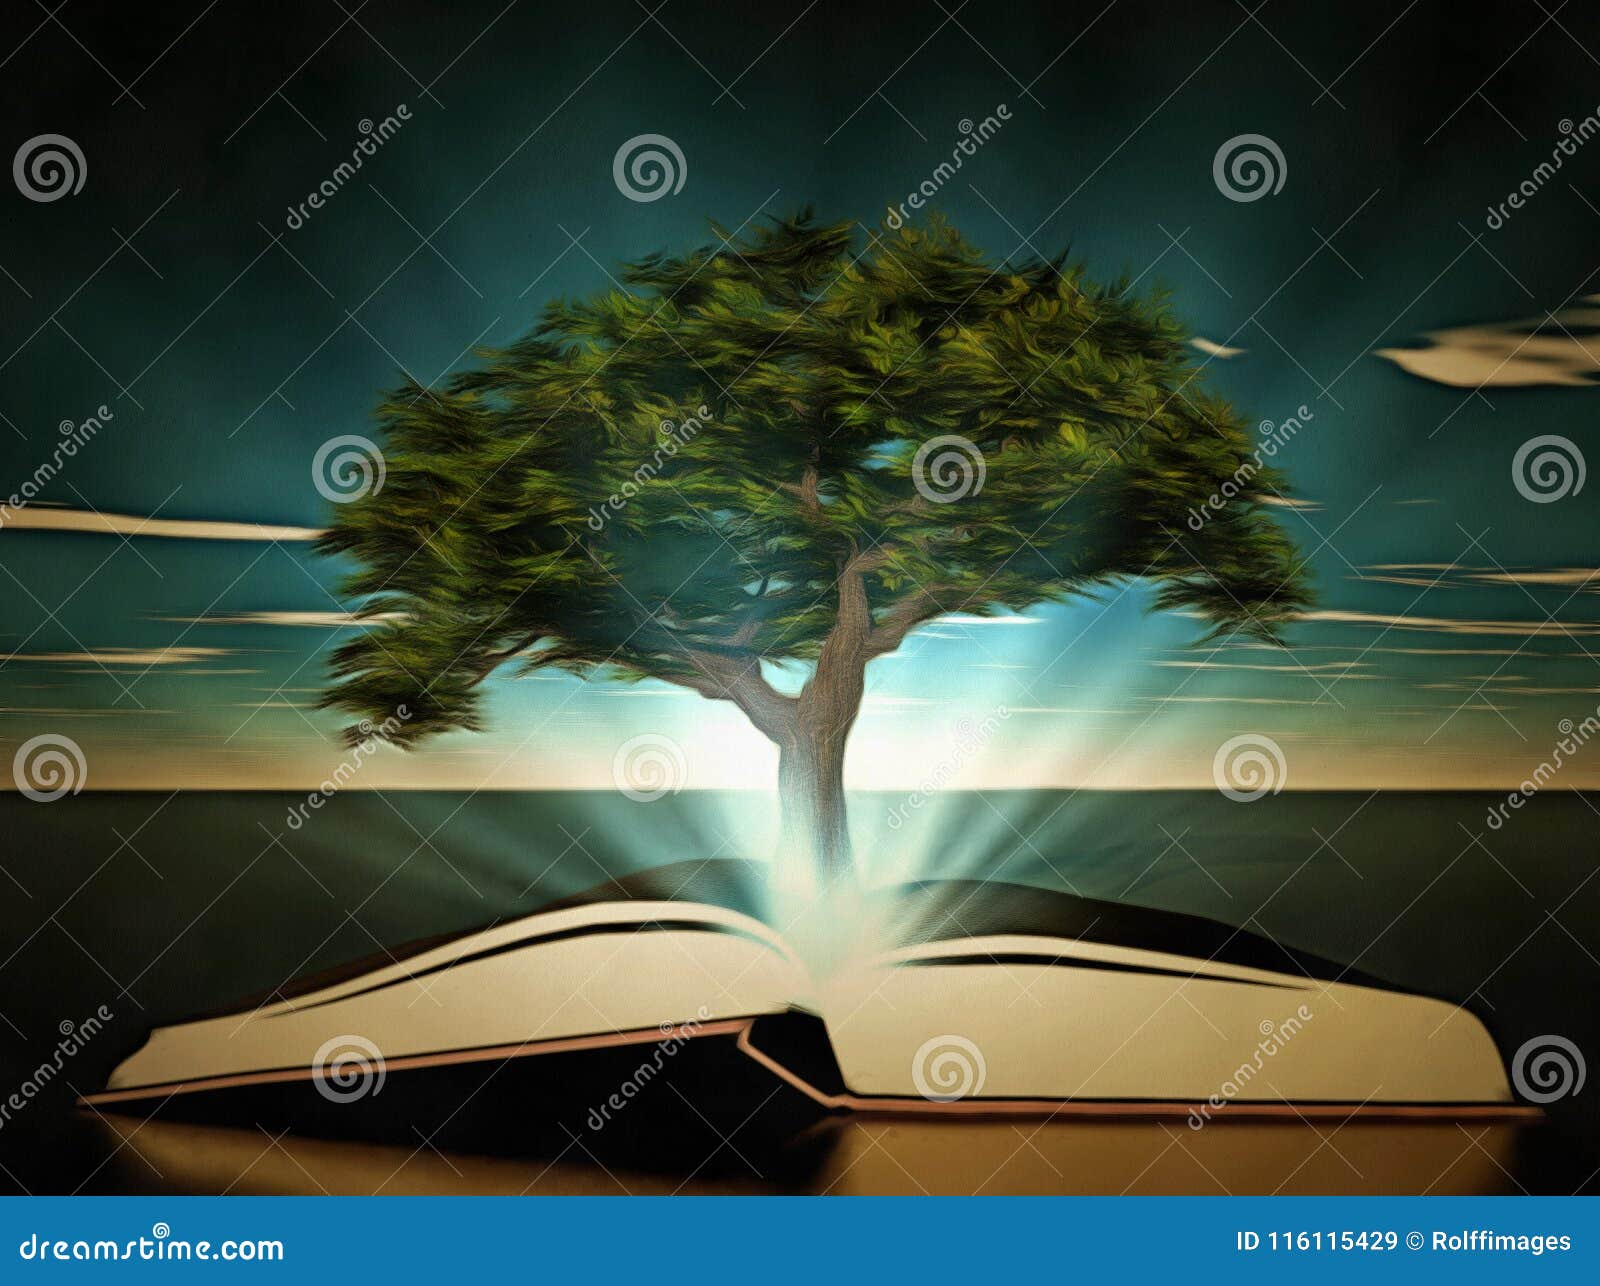 Tree of knowledge stock illustration. Illustration of blue - 116115429